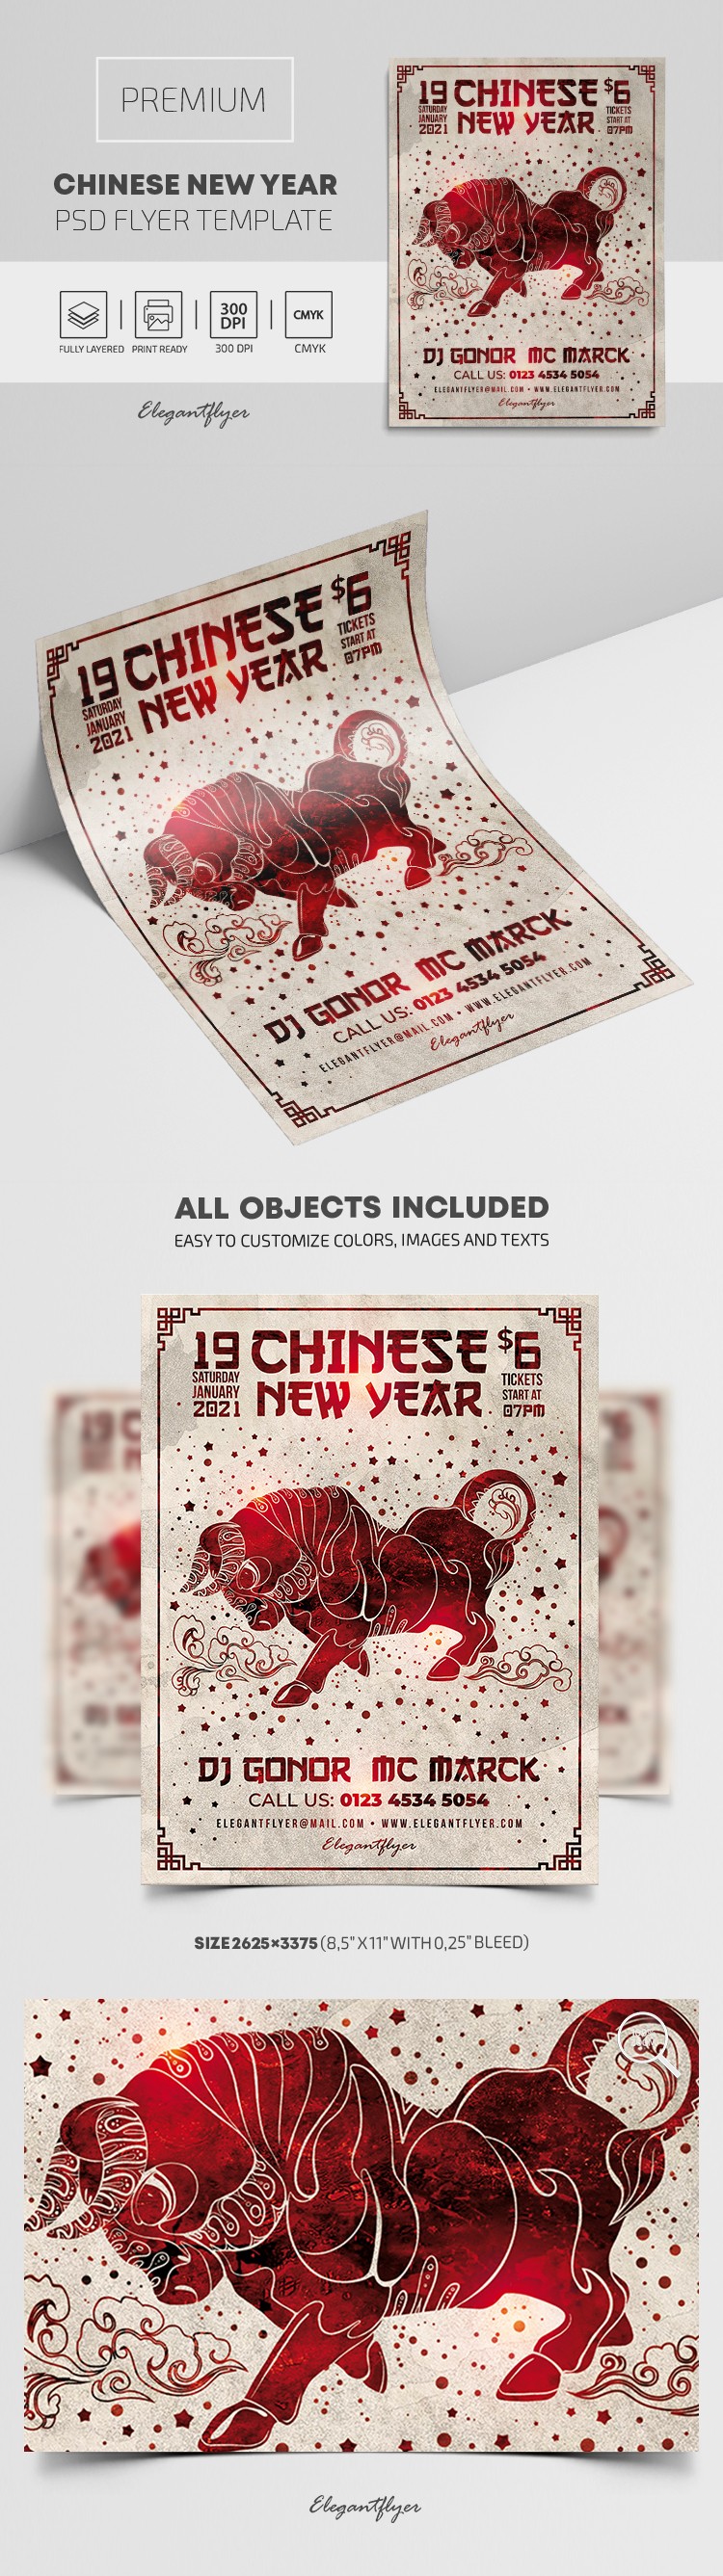 Chinese New Year Flyer by ElegantFlyer